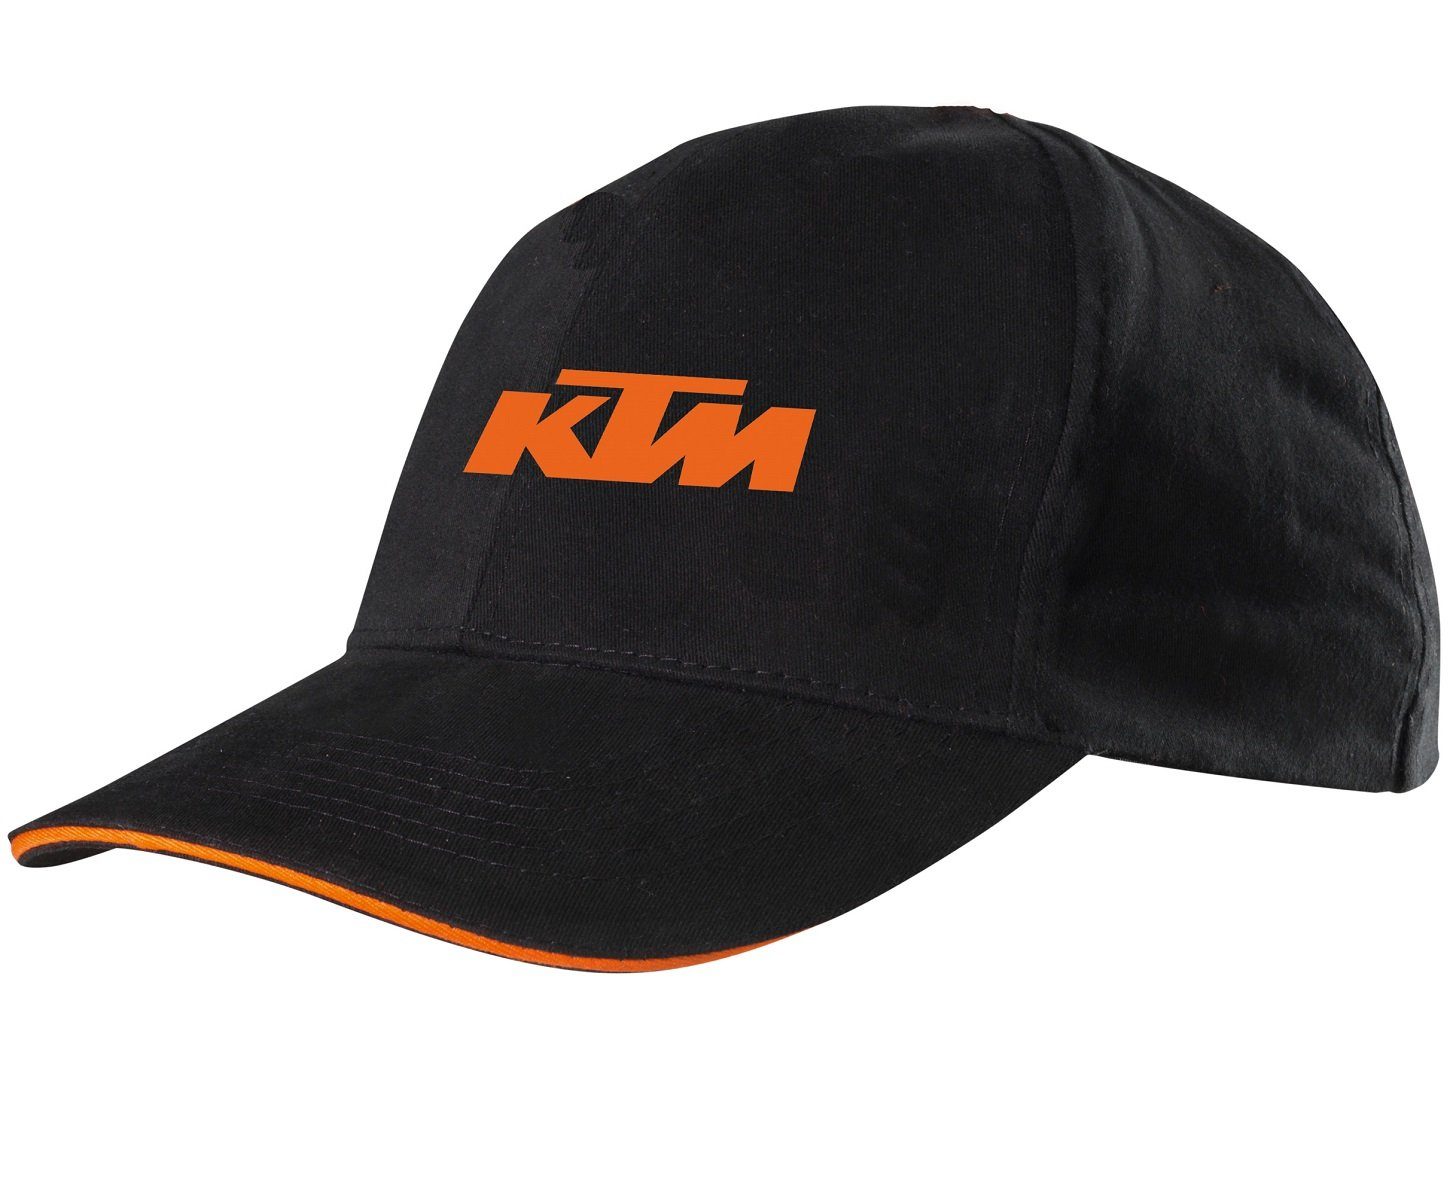 KTM Baseball Cap KTM Kappe, schwarz-orange